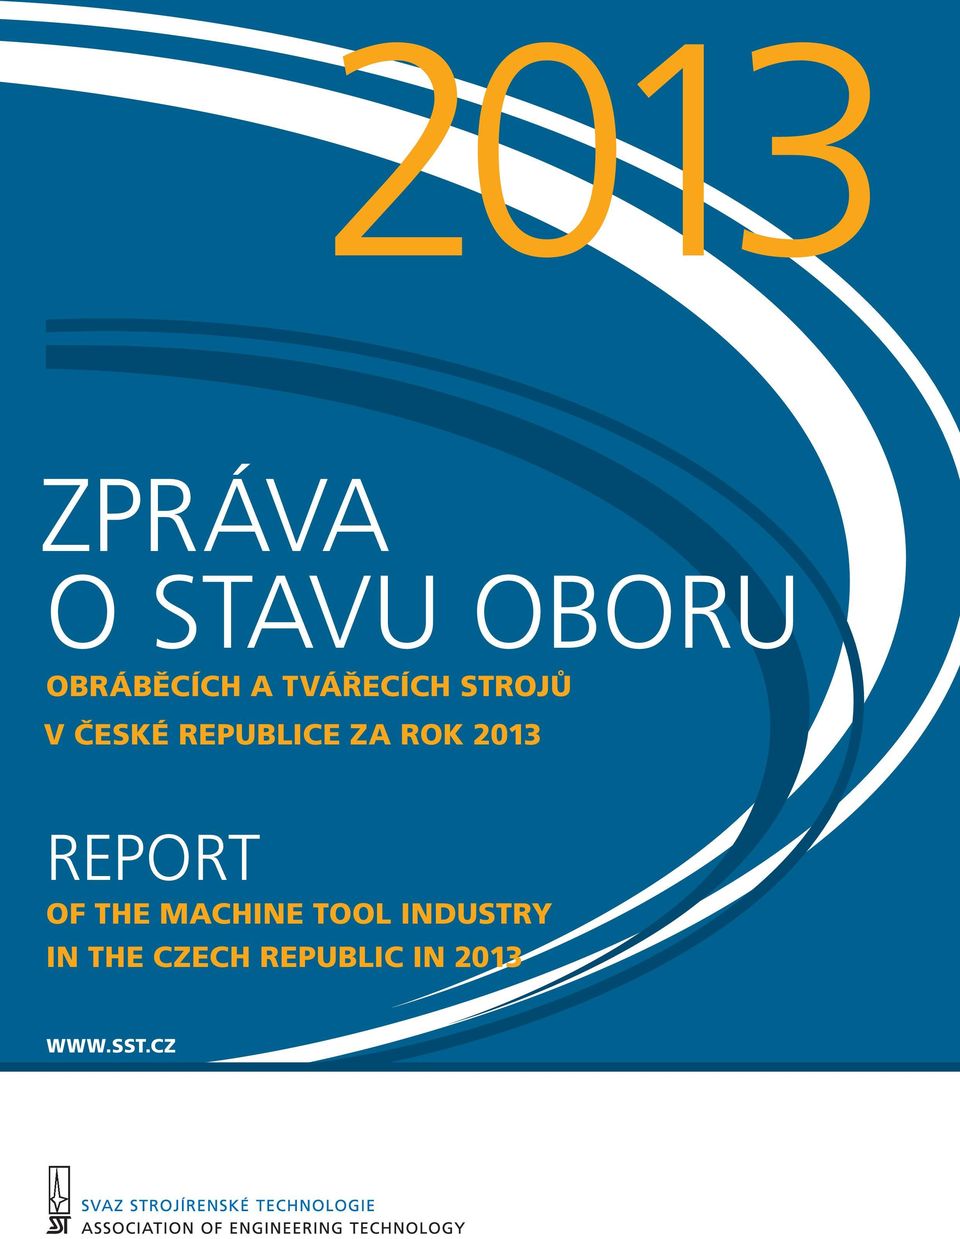 ROK 2013 REPORT OF THE MACHINE TOOL